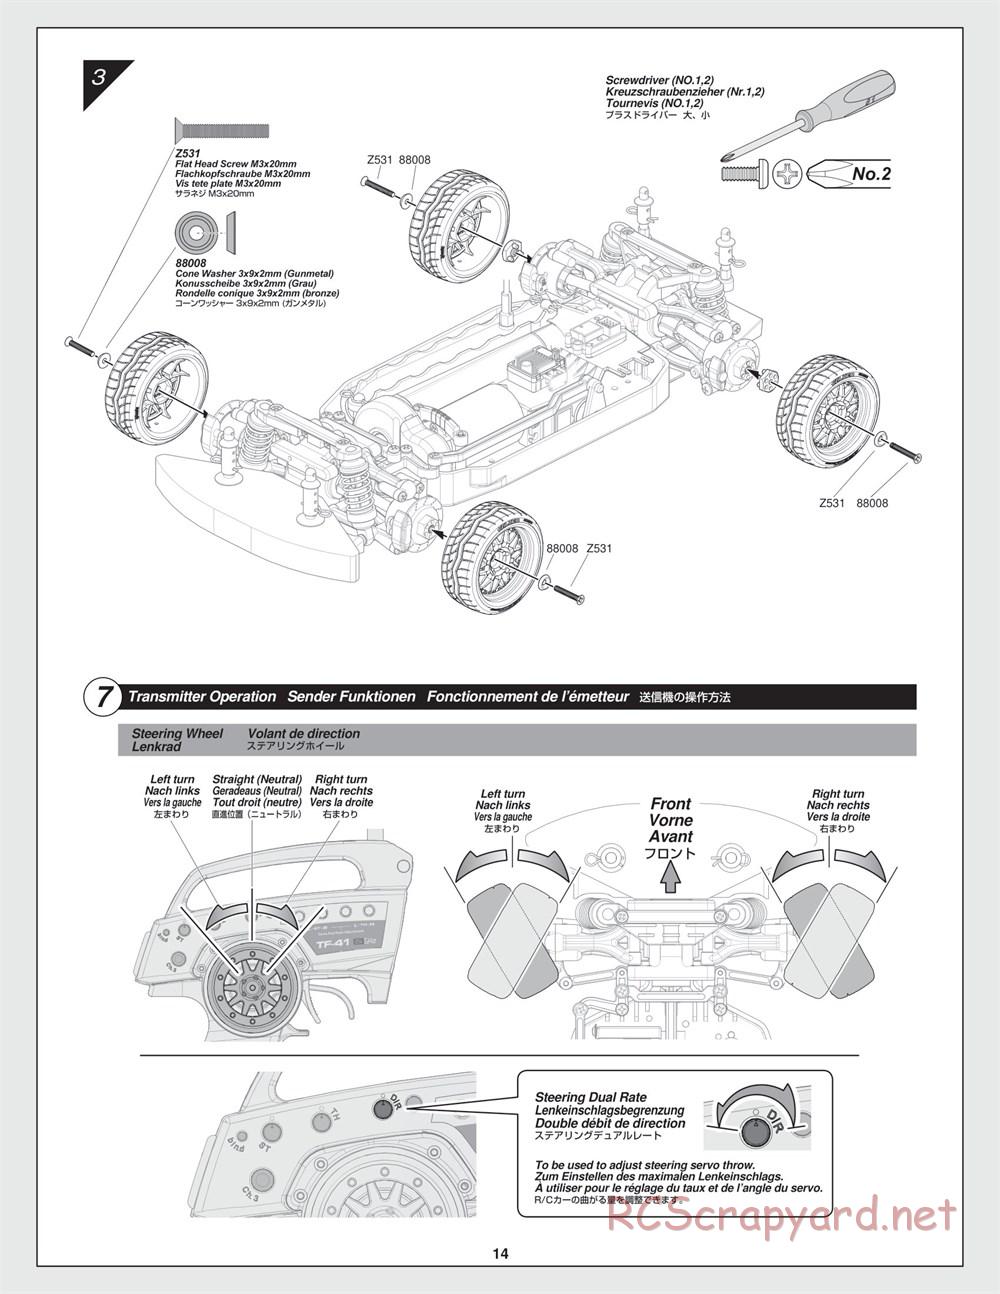 HPI - E10 Drift - Manual - Page 14